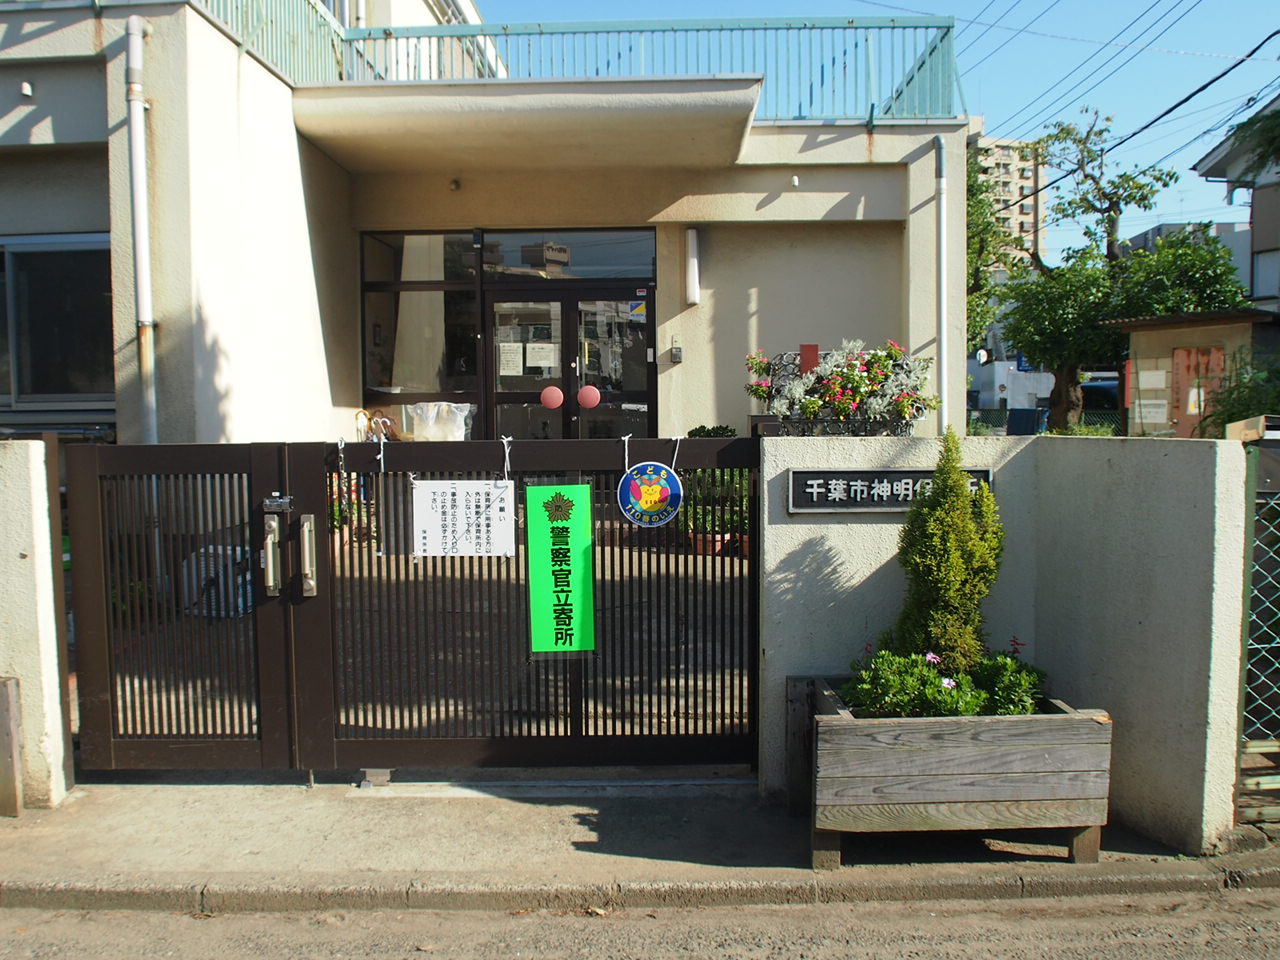 kindergarten ・ Nursery. Shinmei nursery school (kindergarten ・ 421m to the nursery)